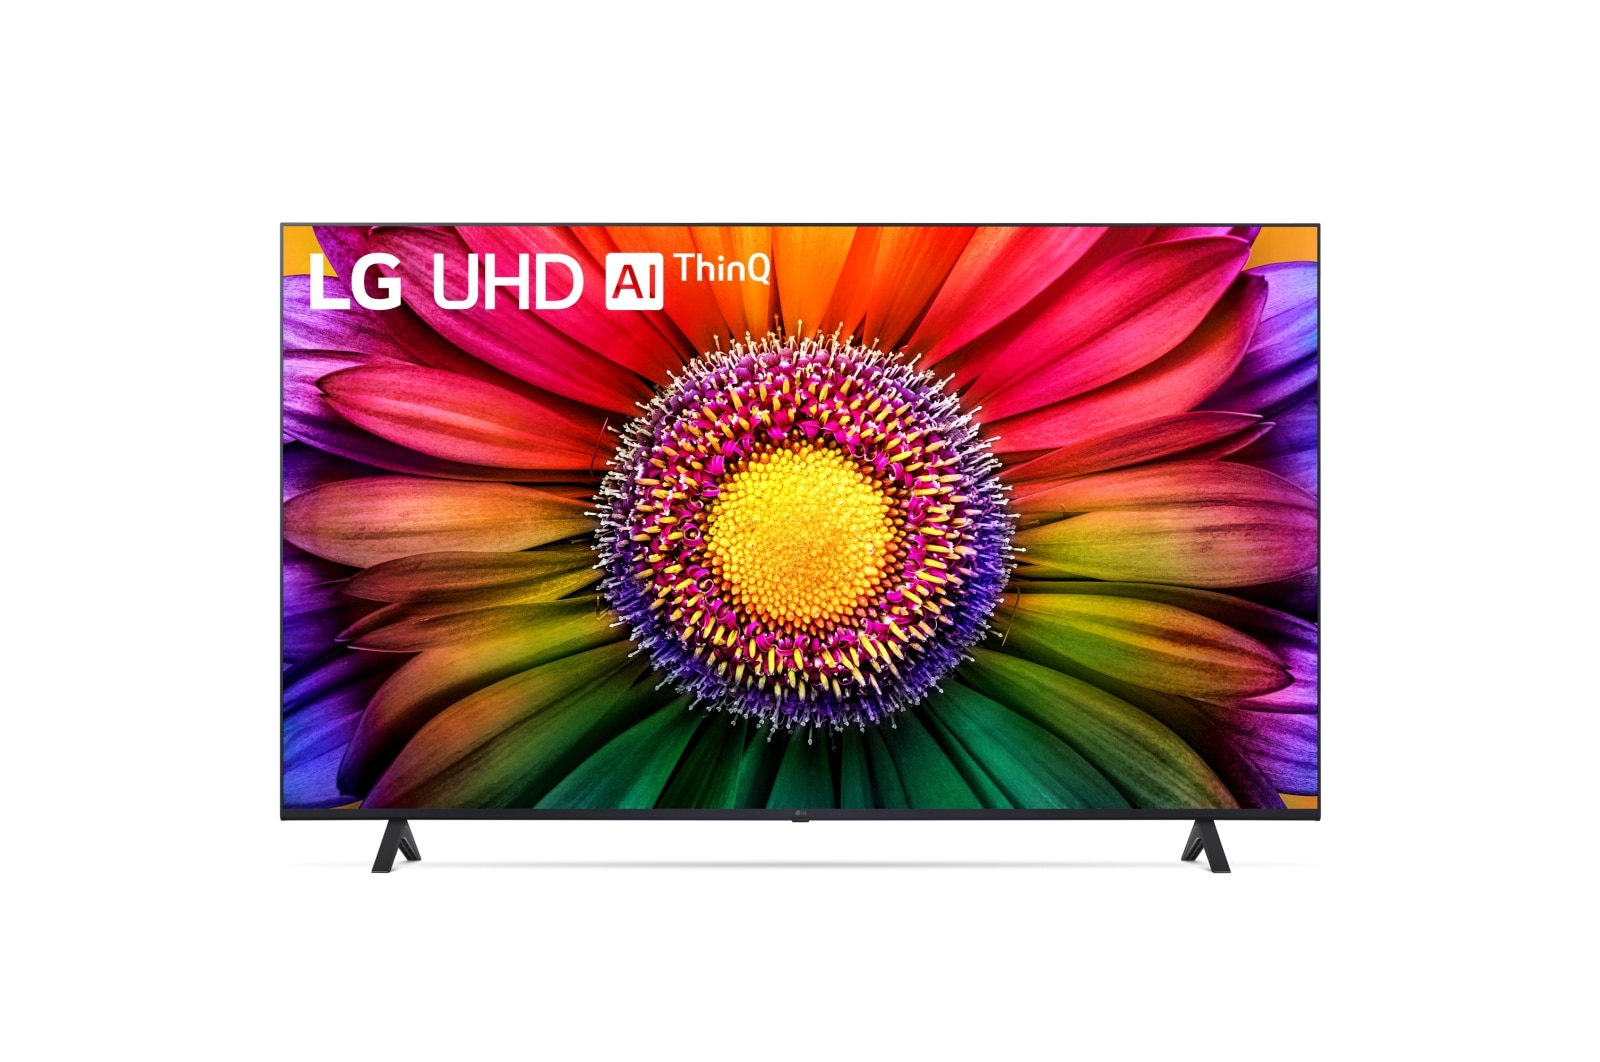 LG Pantalla LG UHD AI ThinQ 65 pulgadas 4K SMART TV  65UR8750PSA, 65UR8750PSA